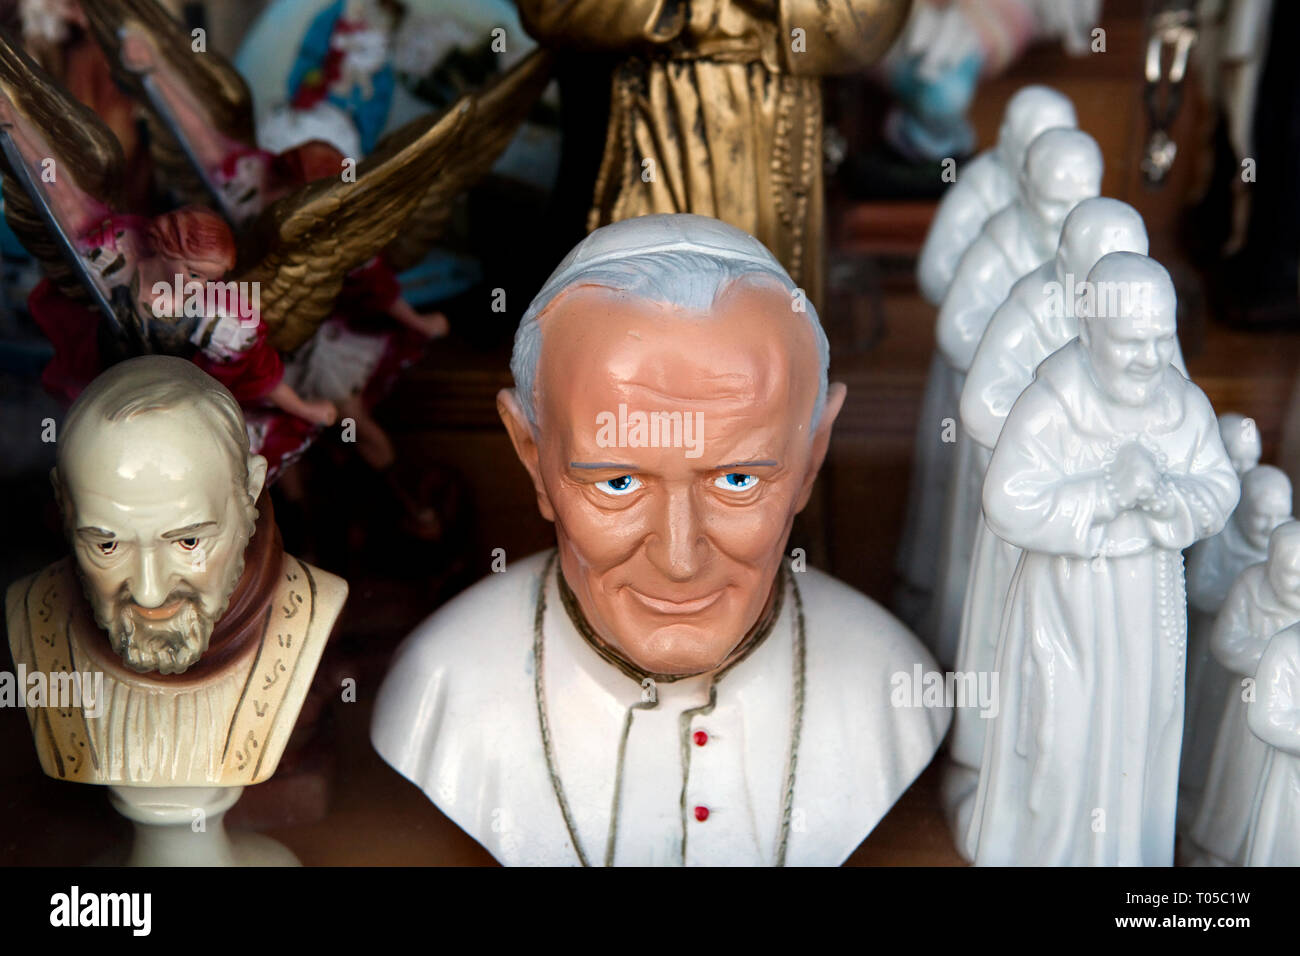 SAN GIOVANNI ROTONDO - Statuen von Papst Johannes Paul II. und Pater Pio im Souvenirshop. Stockfoto